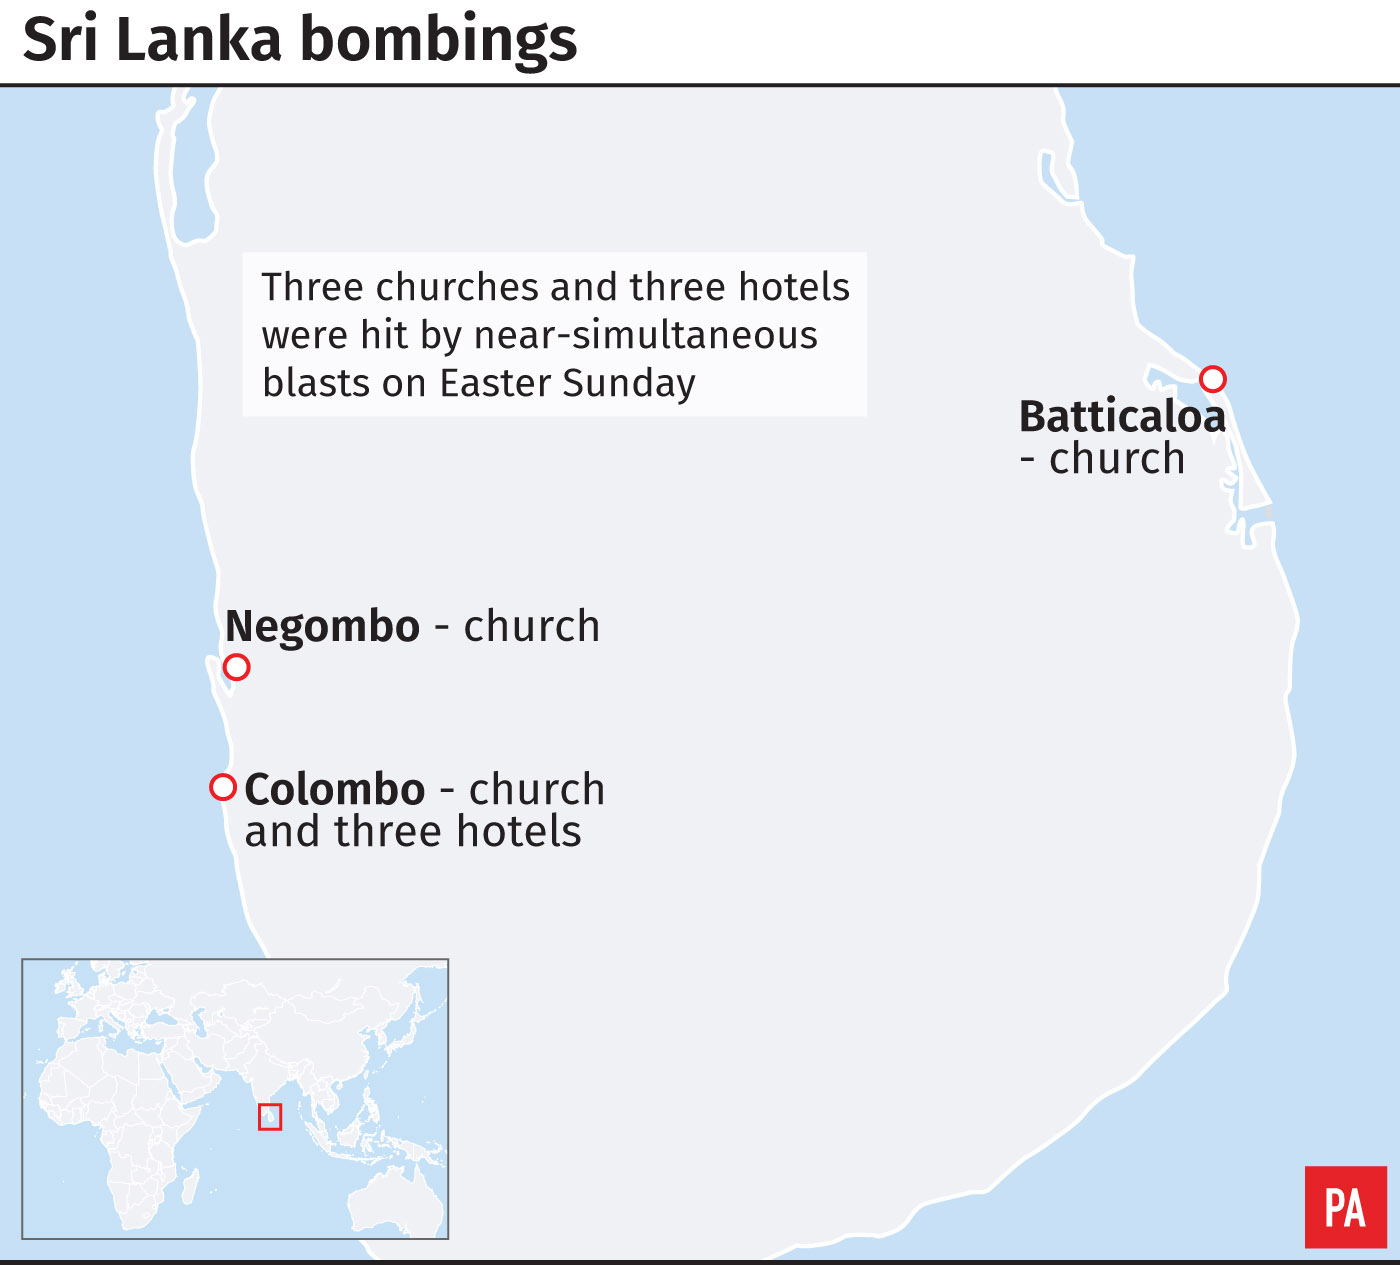 Location of Sri Lanka bombings